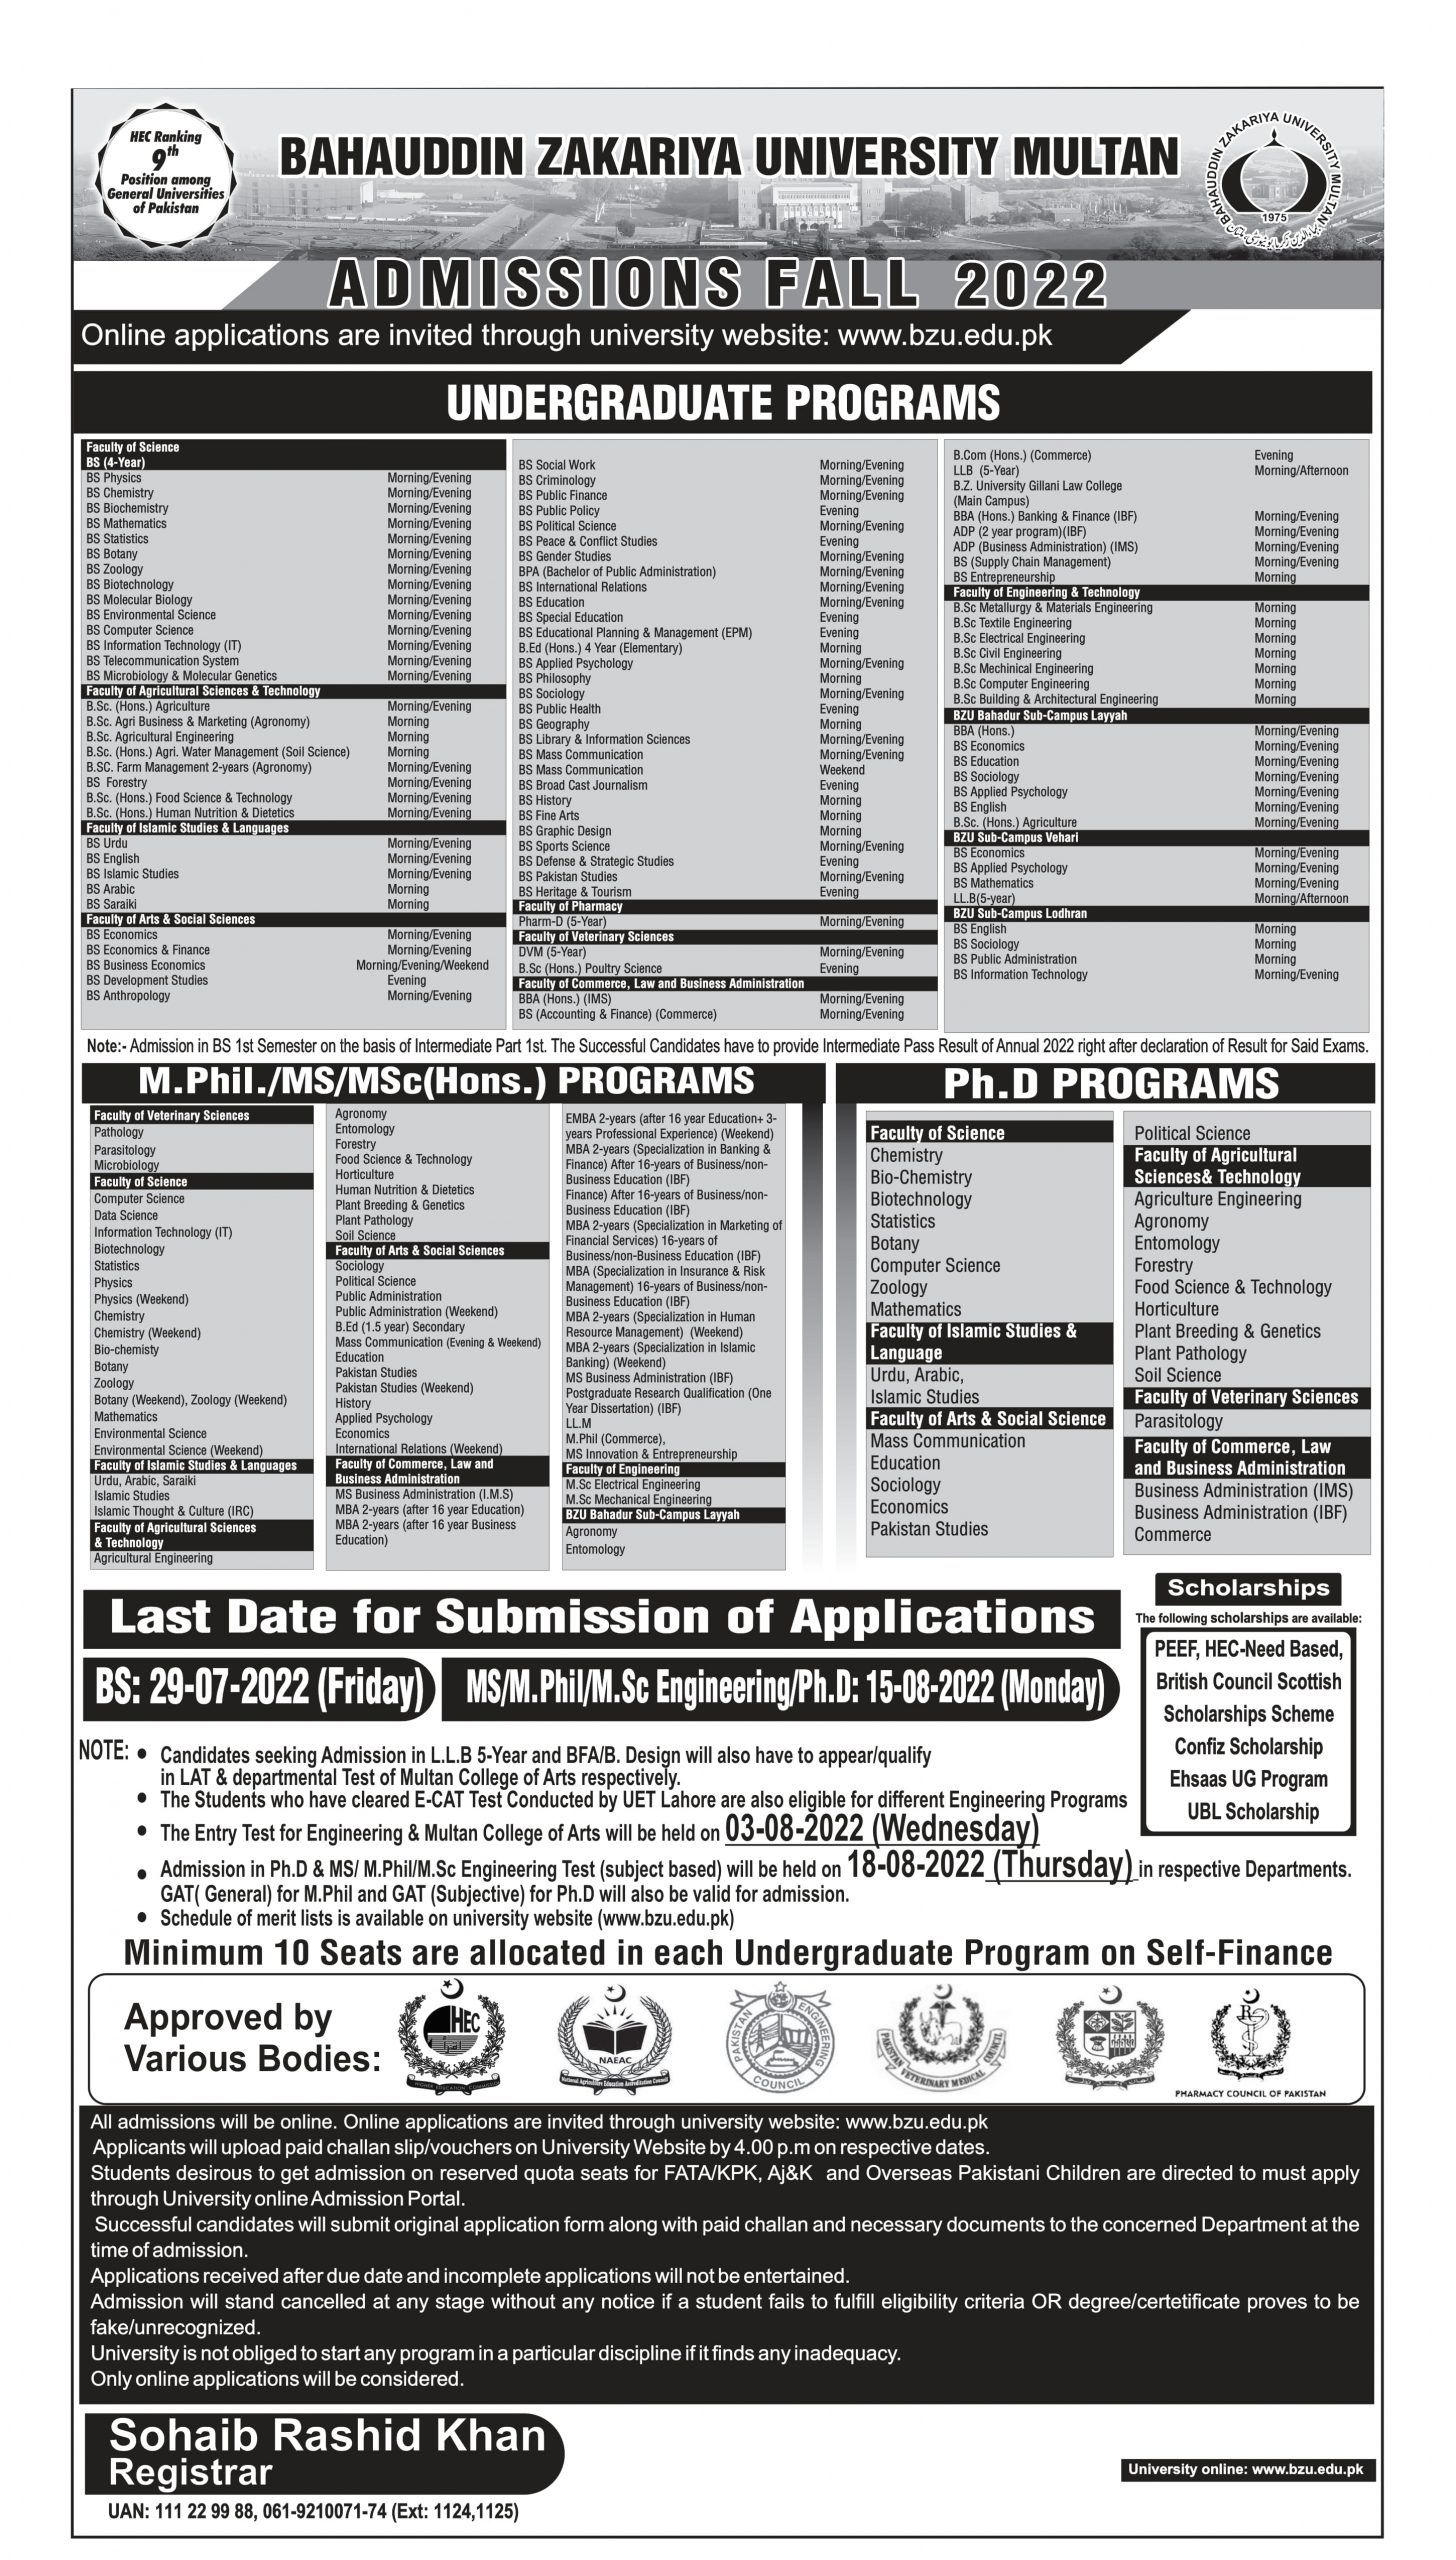 BZU Multan admission 2023 last date advertisement